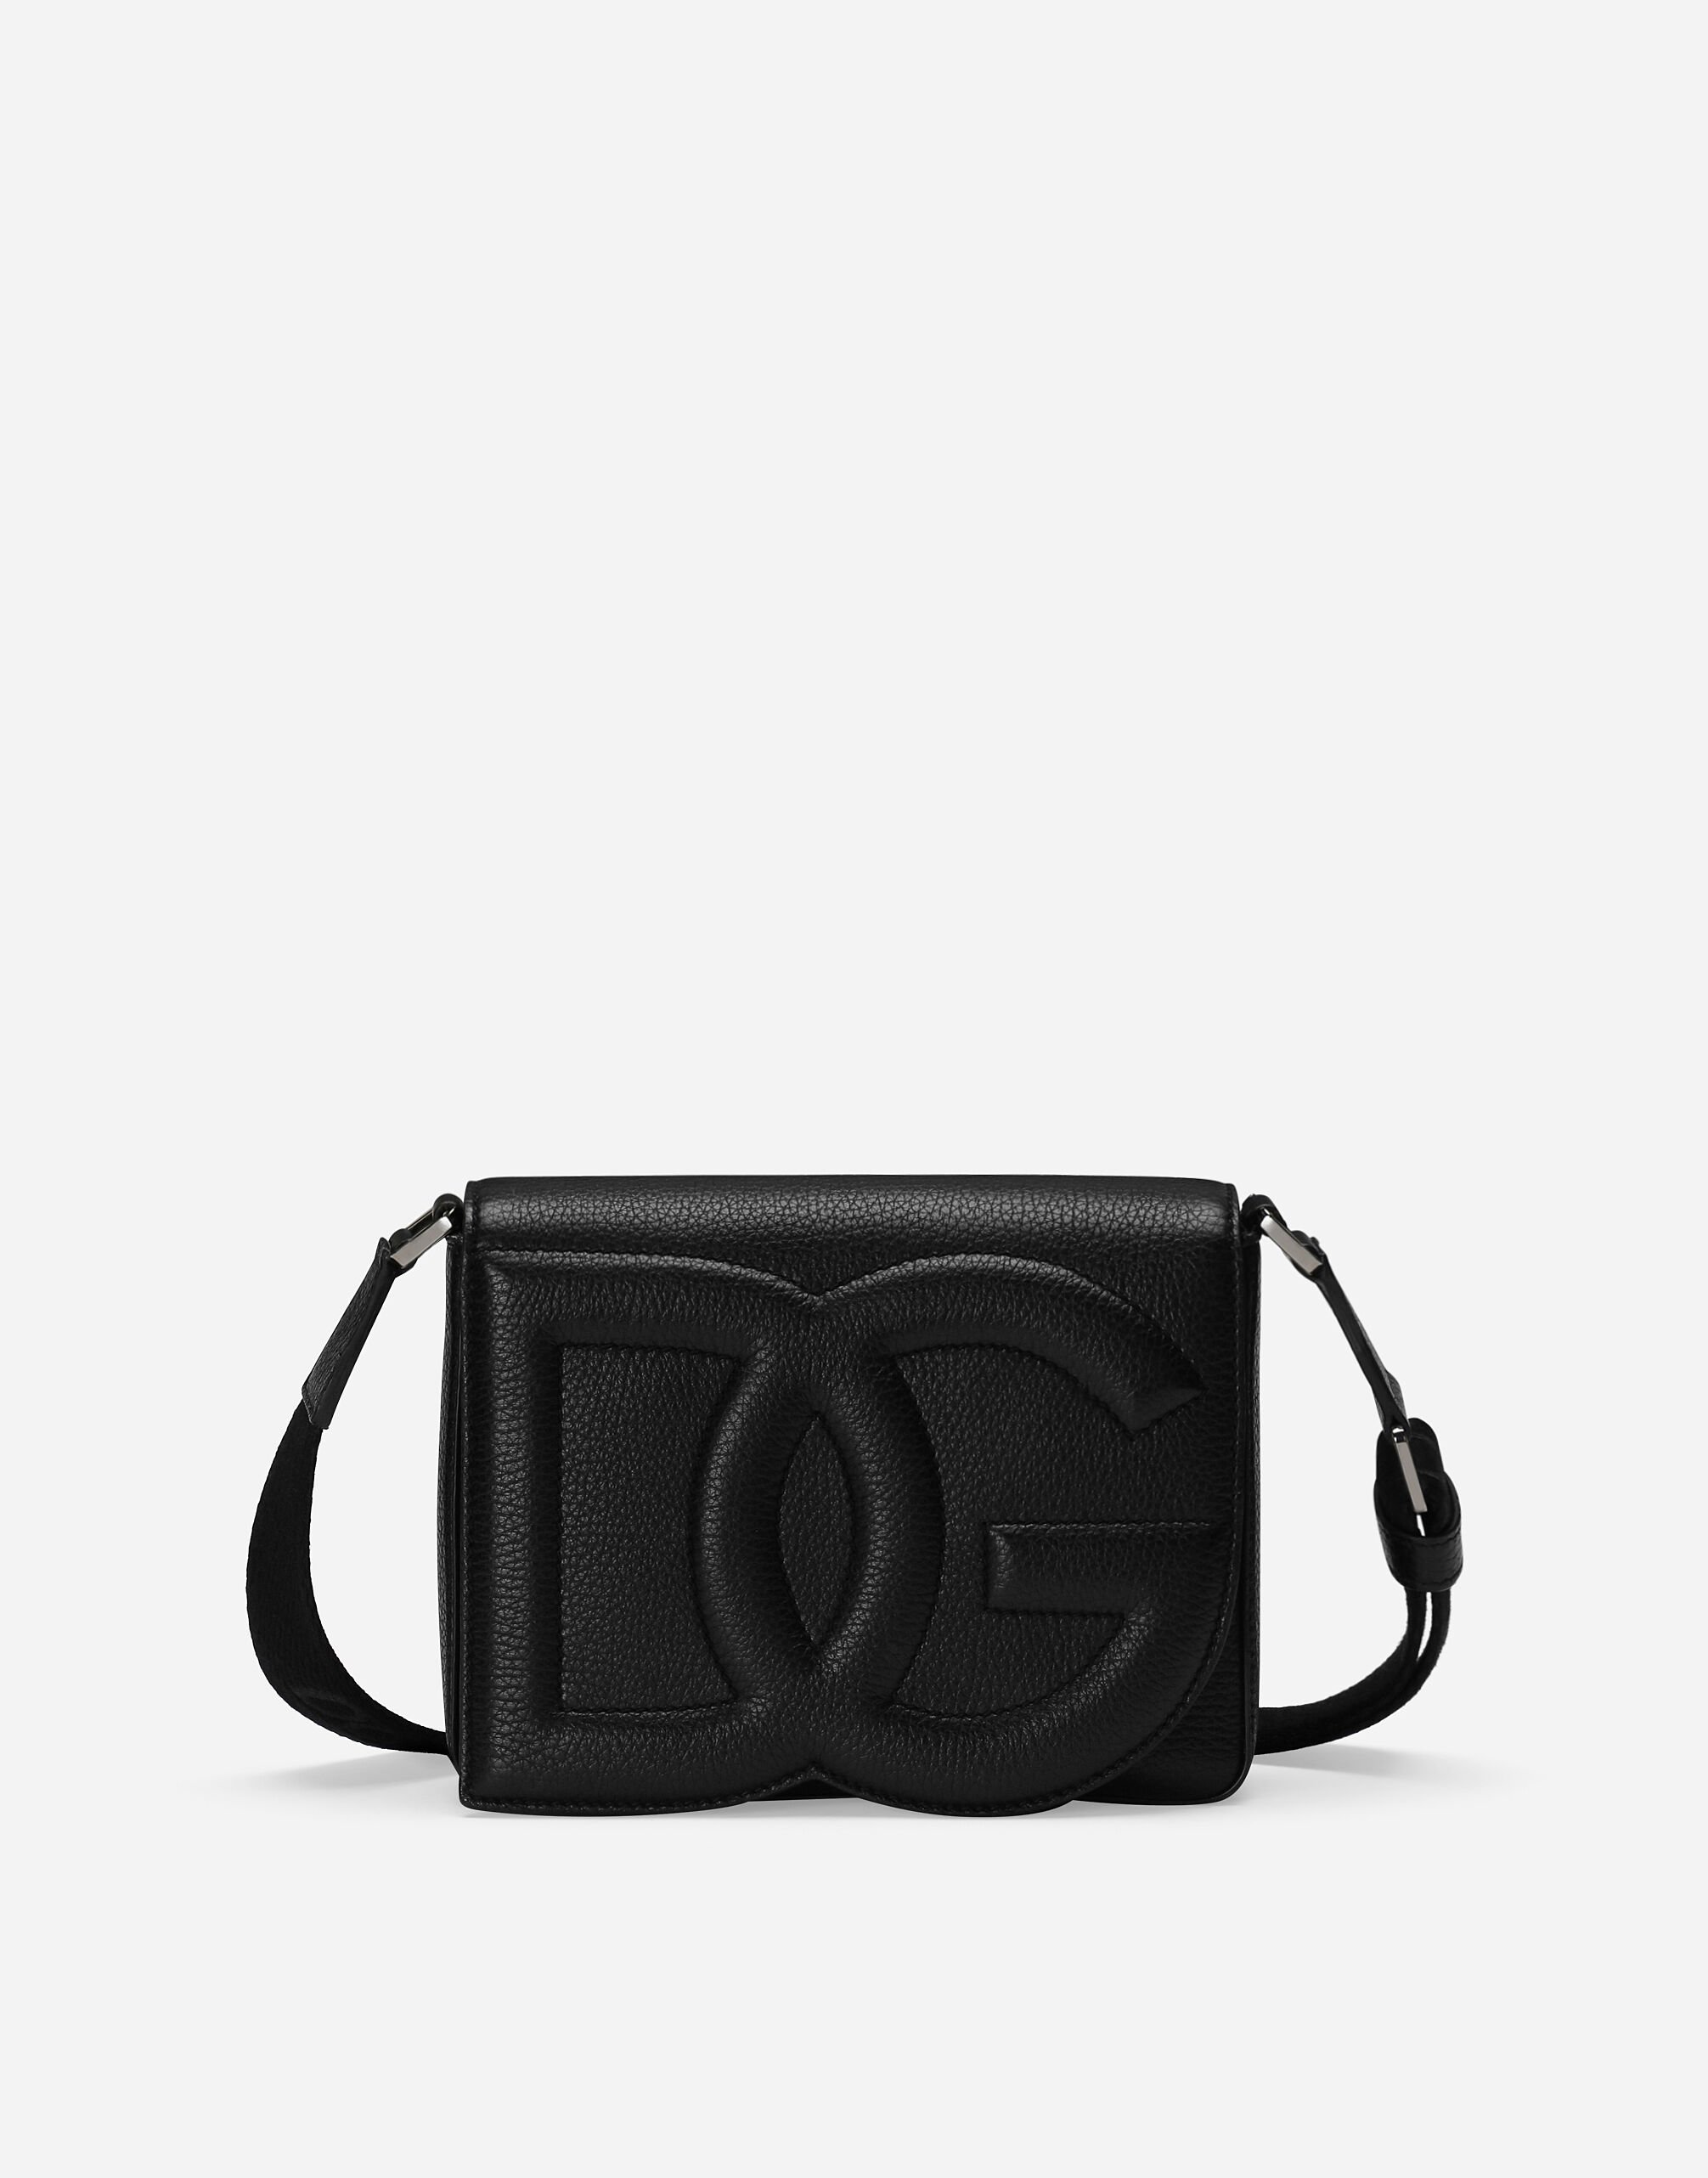 Dolce & Gabbana حقيبة كروس بودي DG Logo متوسطة أسود VG446FVP187